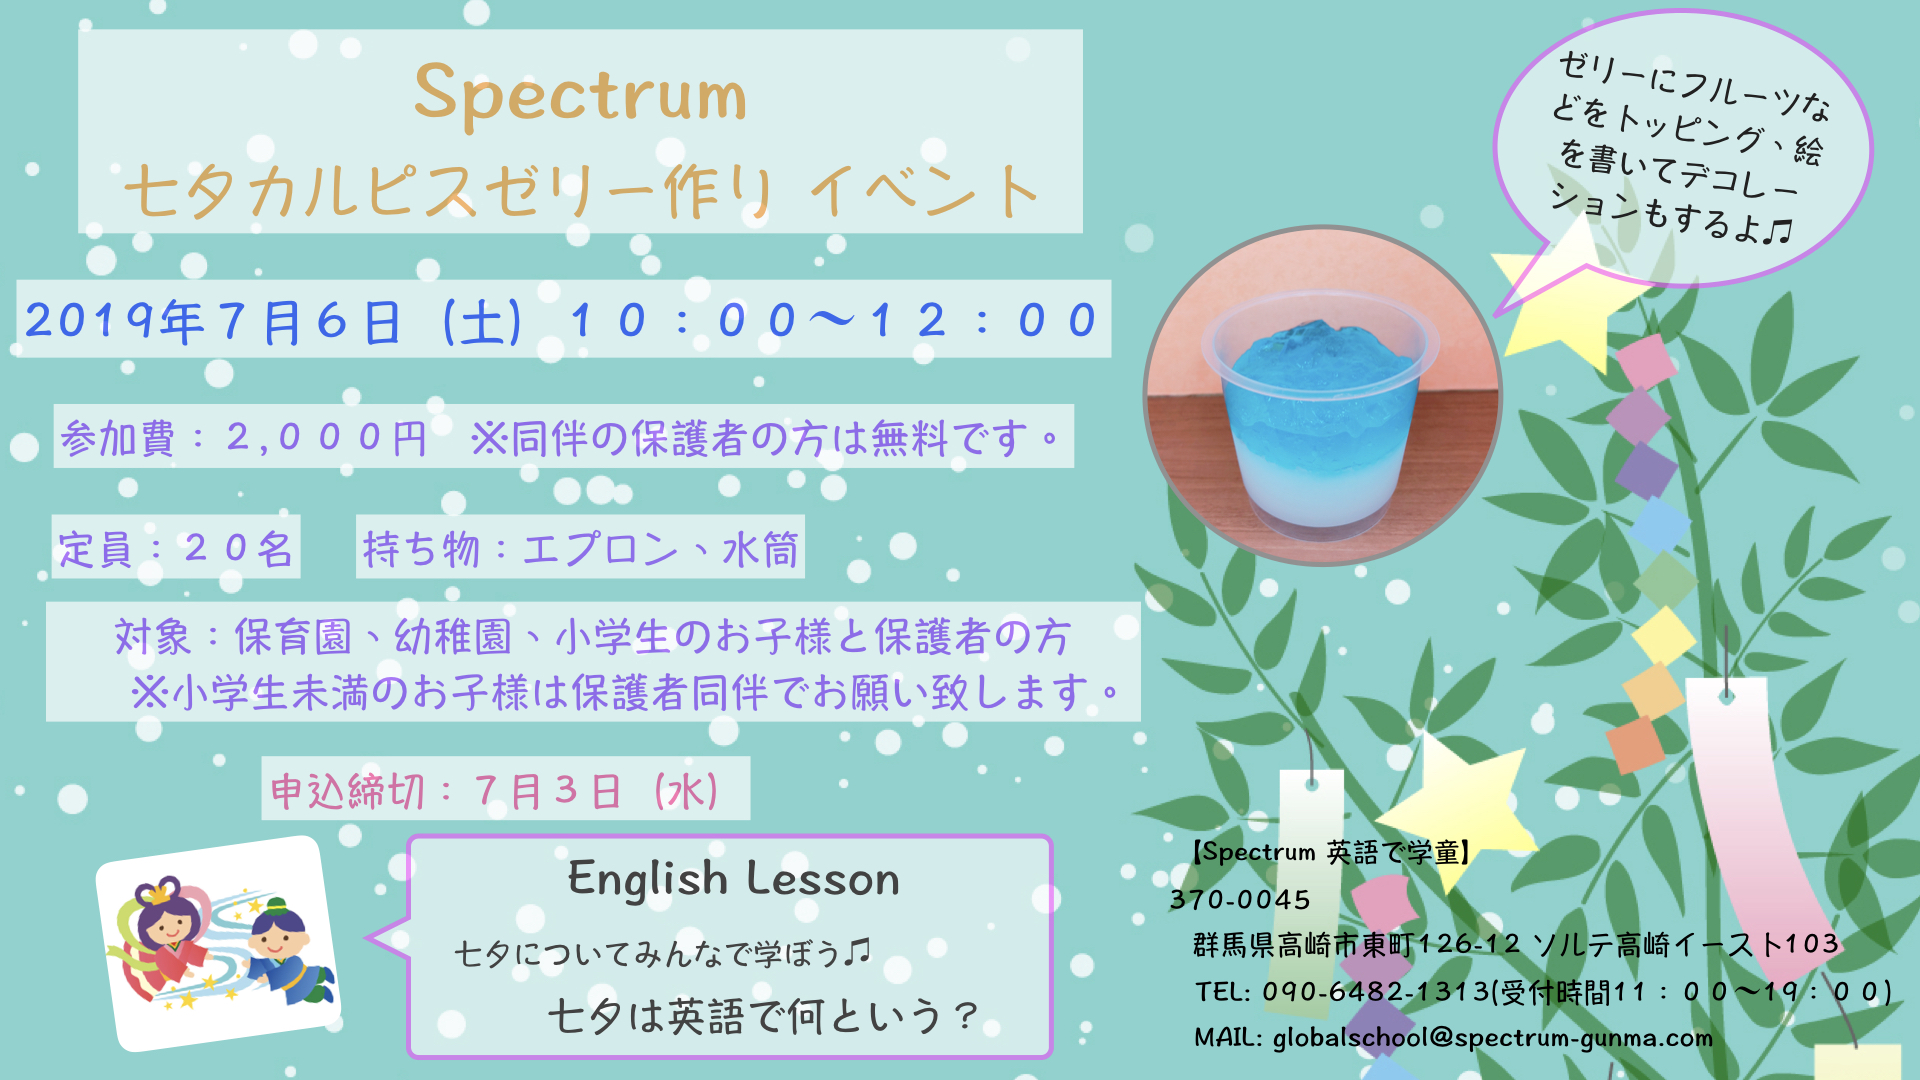 Spectrum 七夕カルピスゼリー 作りイベント Spectrum 英語で学童